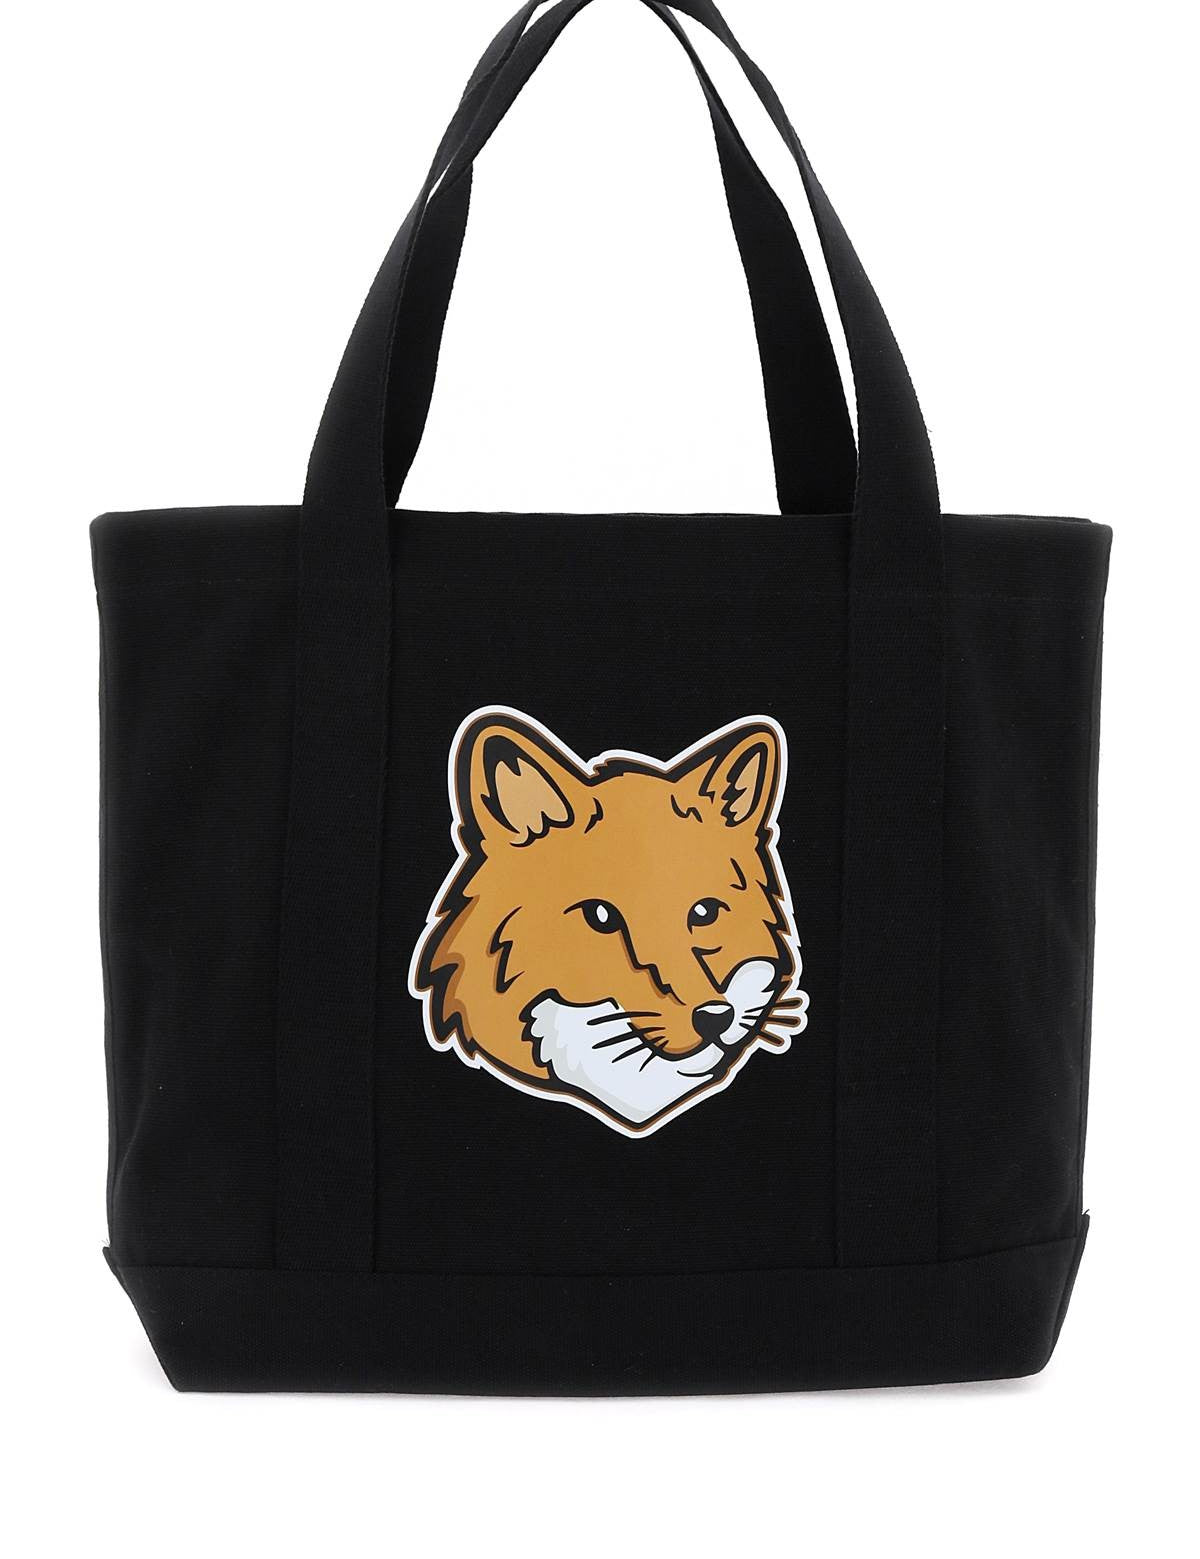 maison-kitsune-fox-head-tote-bag_1ebe9a30-ec66-4520-aabb-598fbd7794fe.jpg